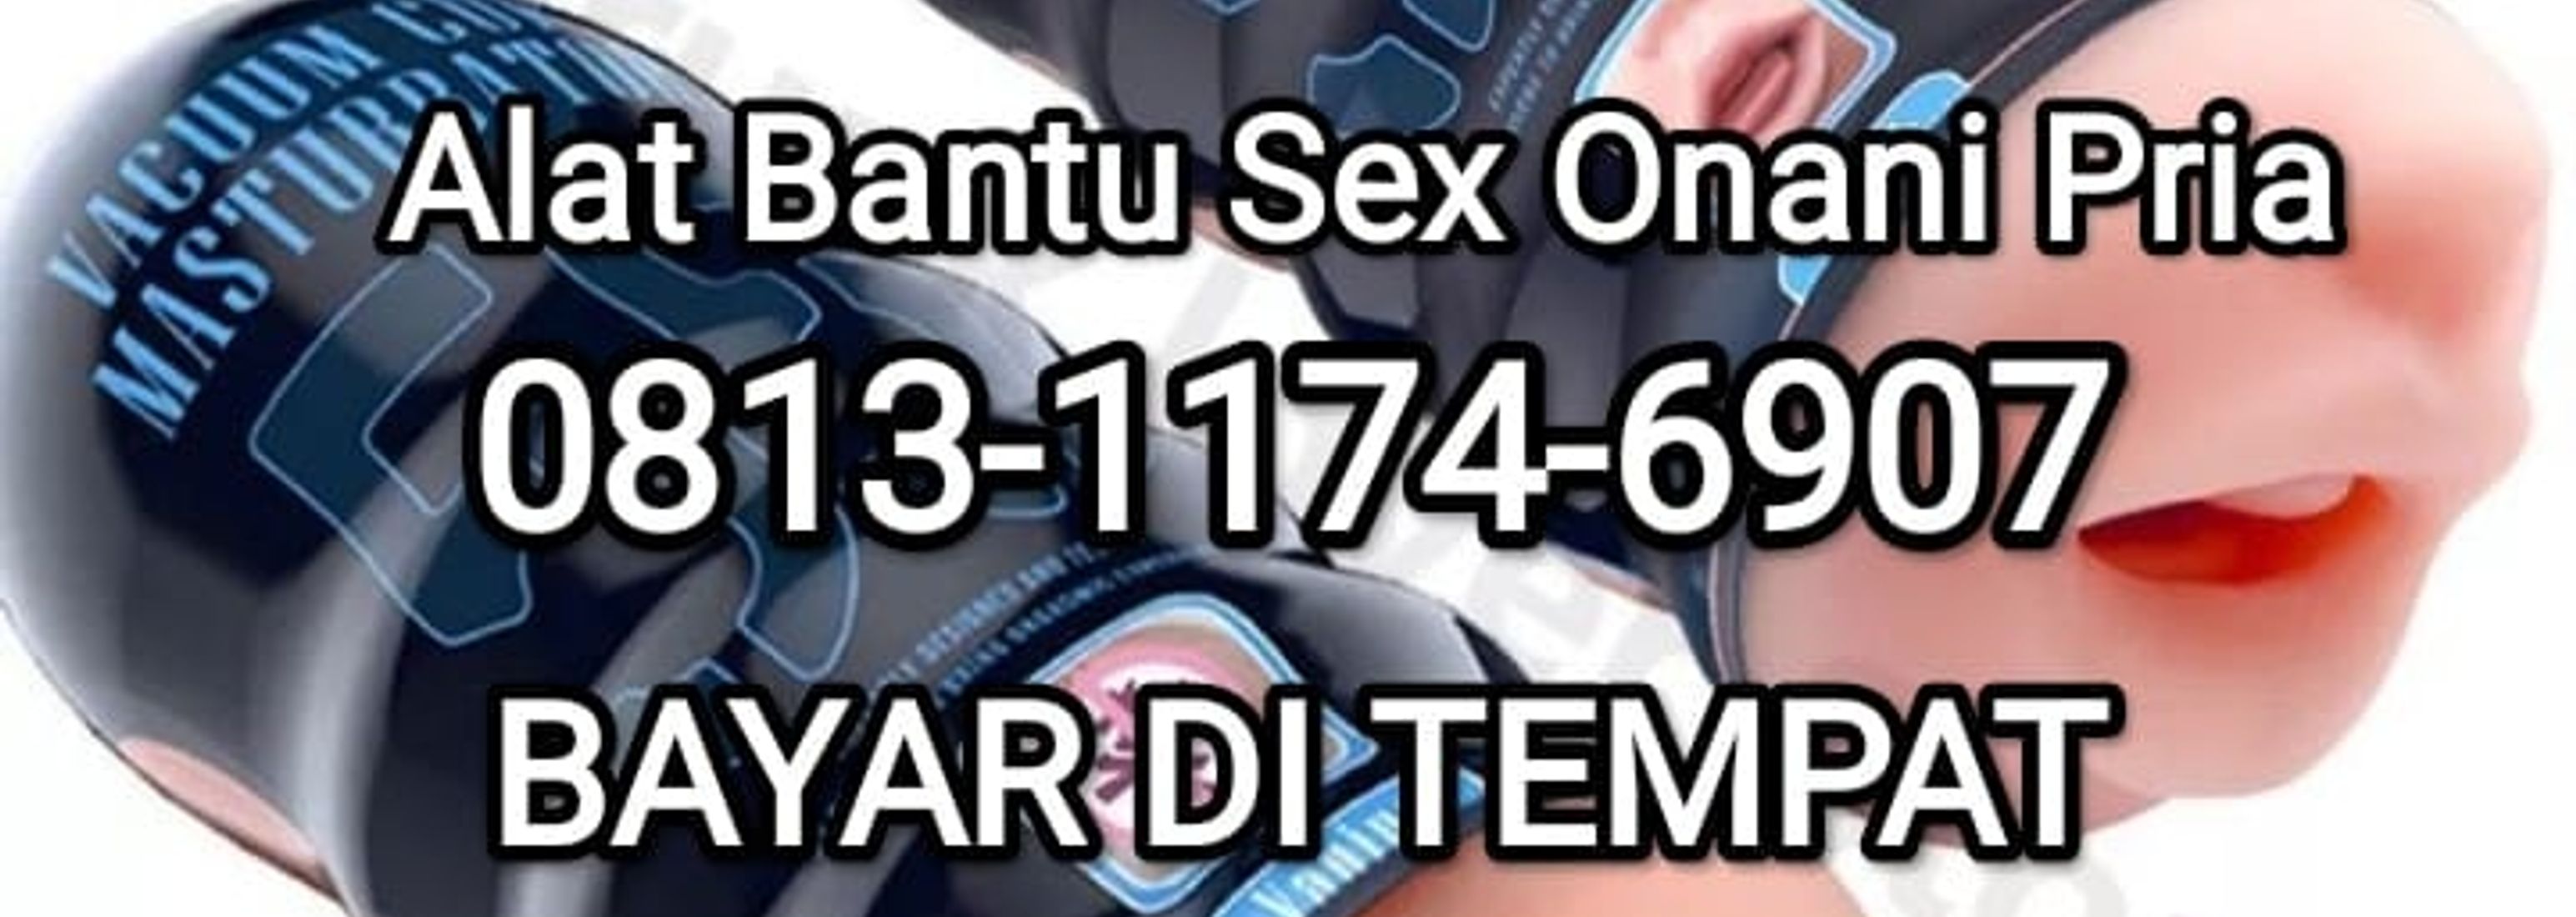 Jual Alat Bantu Sex Onani Pria Di Sulawesi 081311746907 Bisa Lewat Kurir Jobs And Projects The Dots